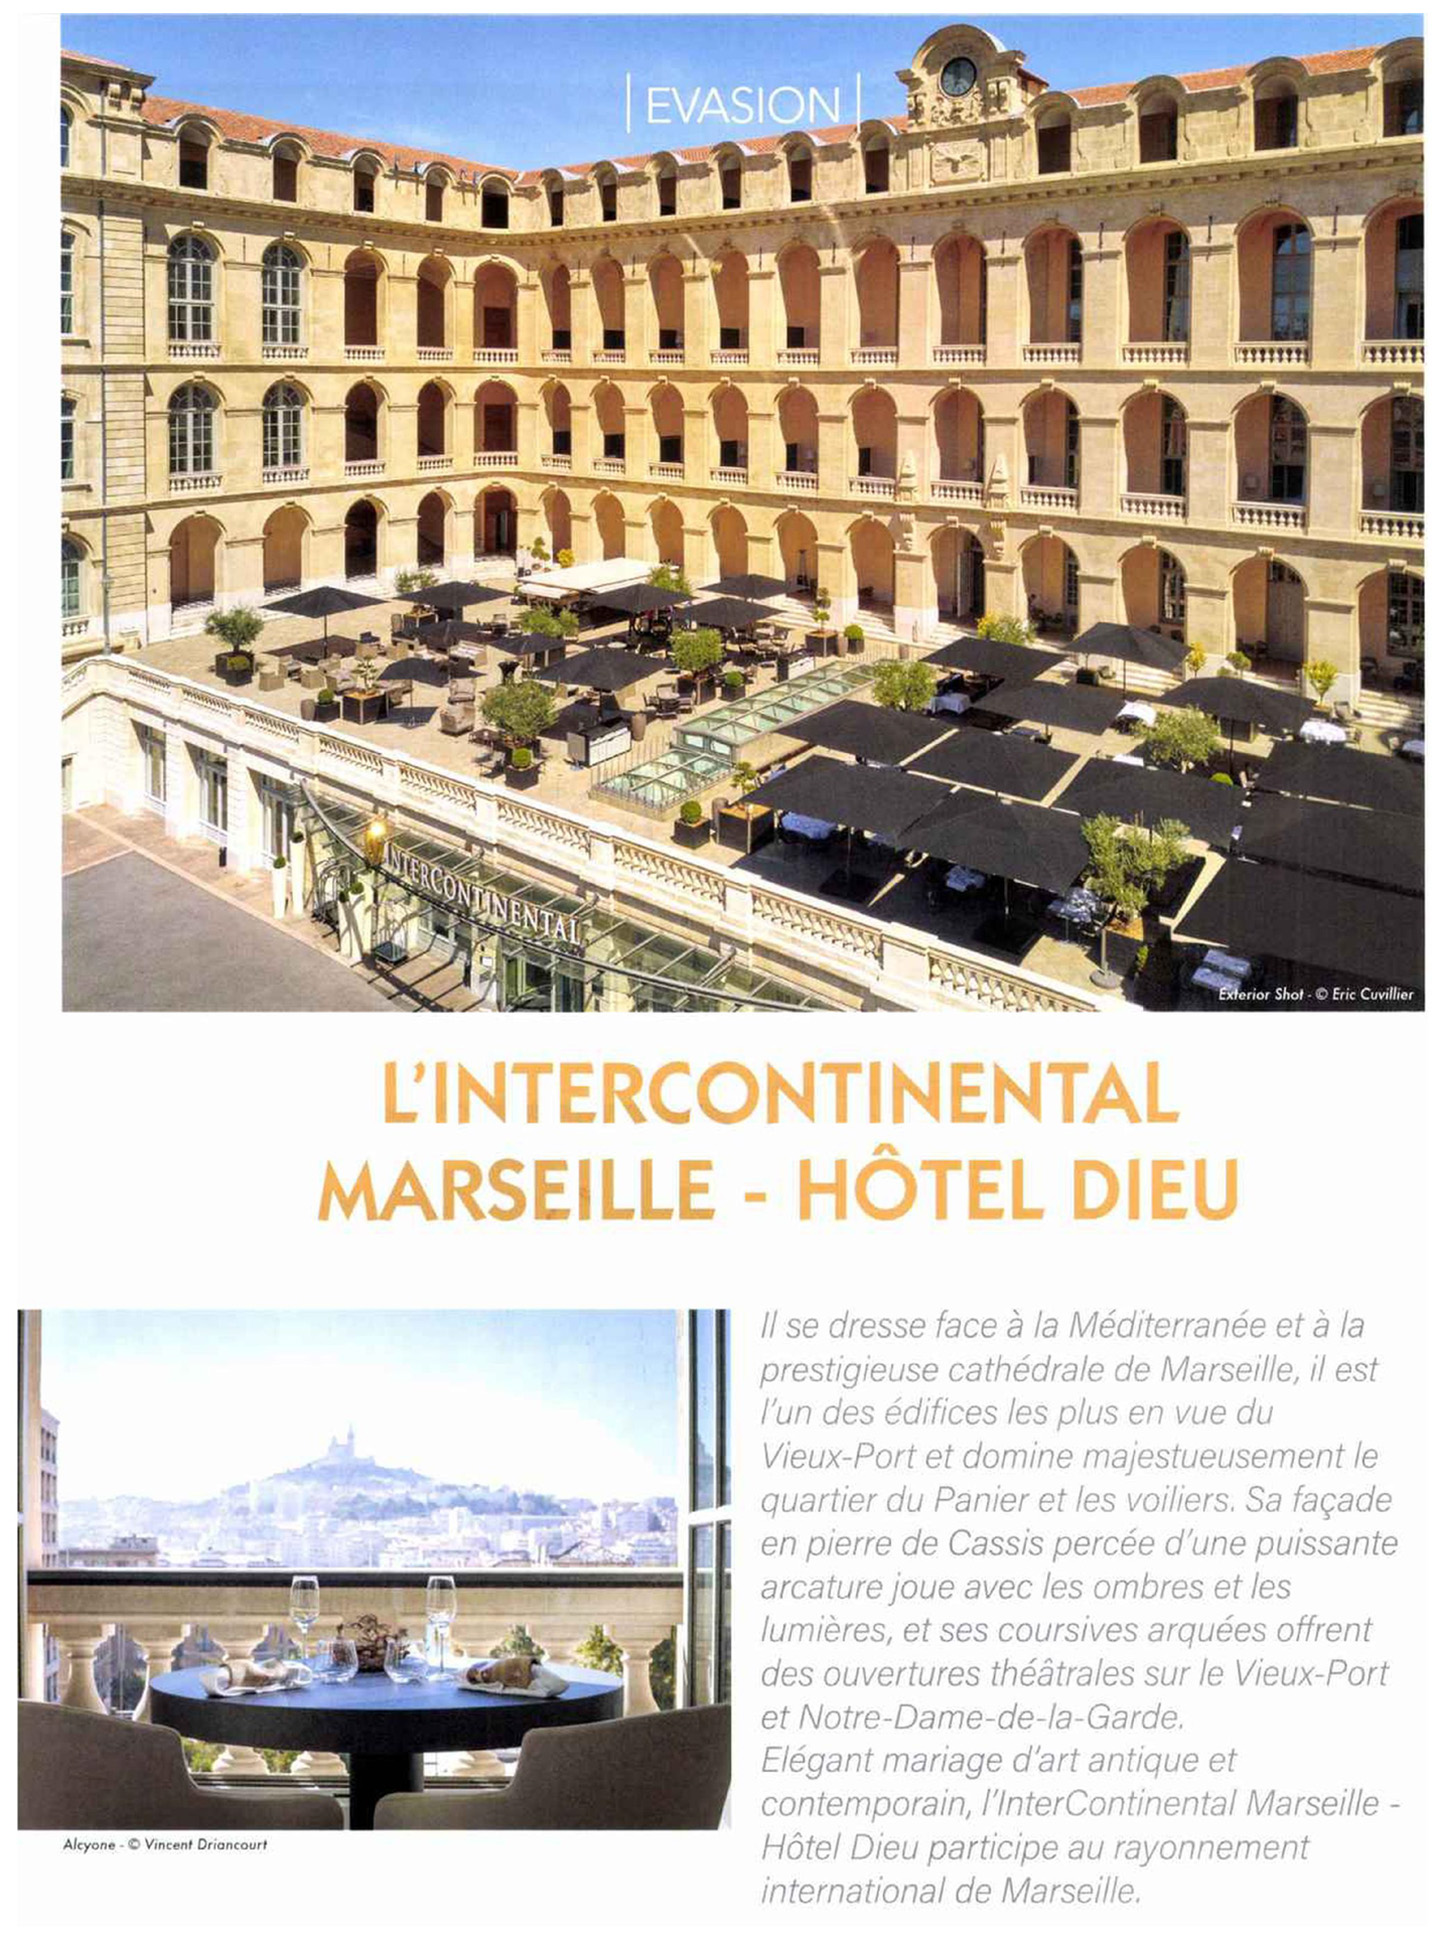 article on InterContinental Marseille Hôtel Dieu in maison et jardin magazine, luxury hotel designed by french architect jean-philippe nuel